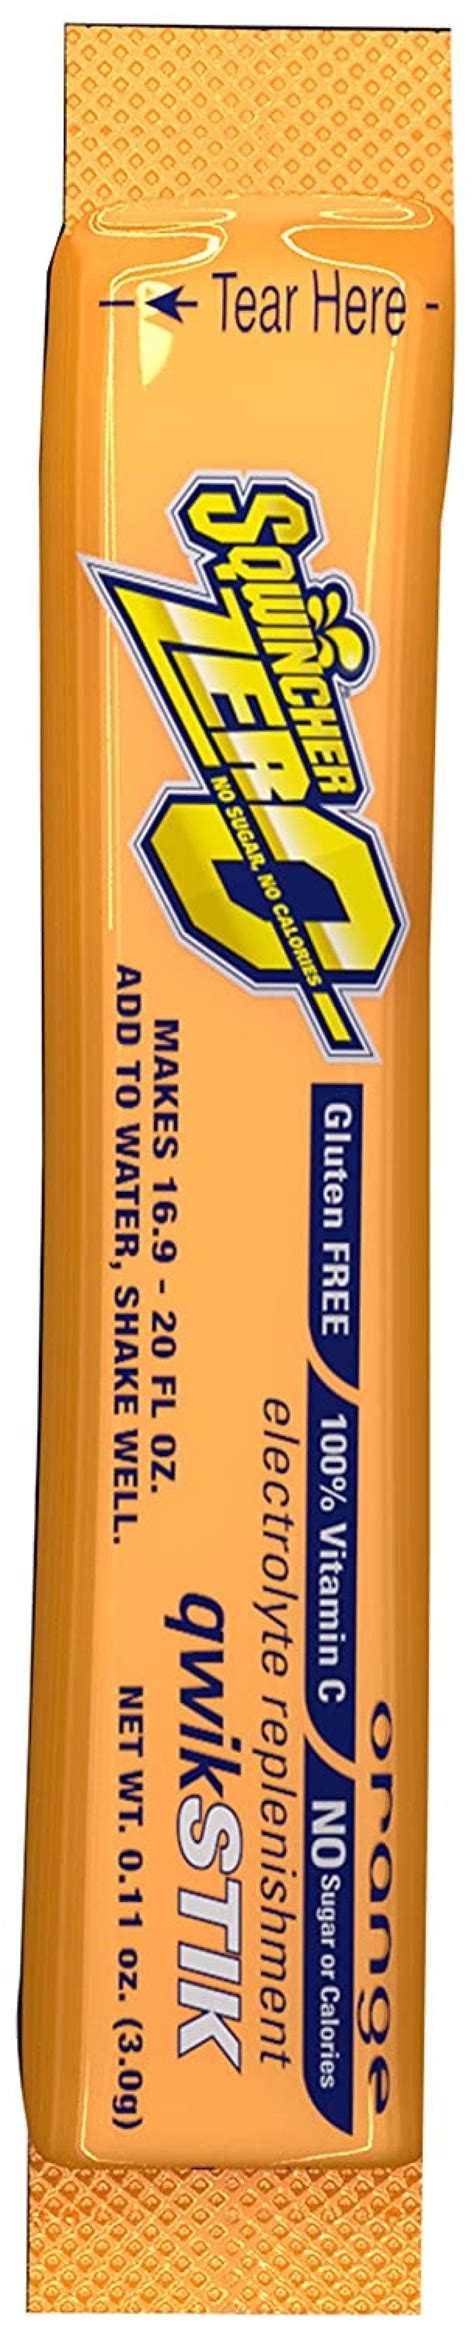 Sqwincher 060100 Or Zero Qwik Stik Powder 20 Oz Orange Standard